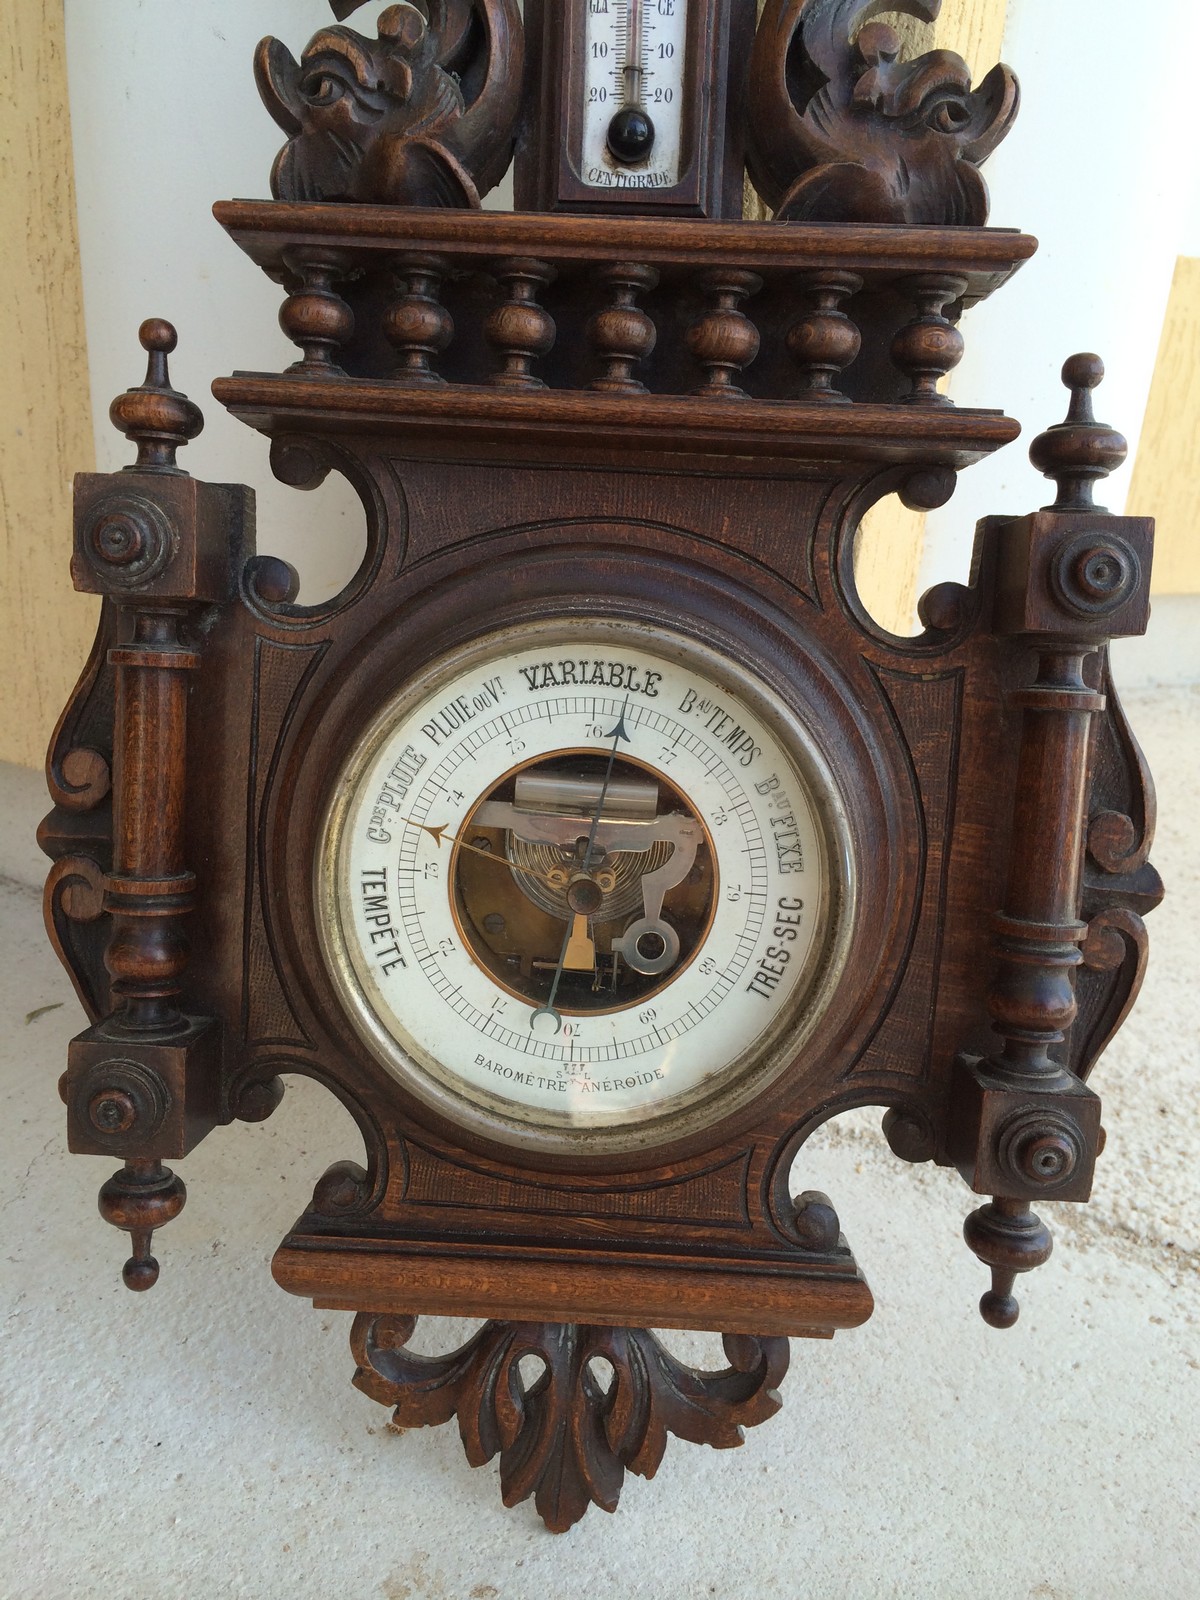 Барометр с часами настенный. Барометр Wilhelm Bernhardt. Барометр 19-20 век. Barometre metallioue антикварный. Старинные настенные часы с барометром.